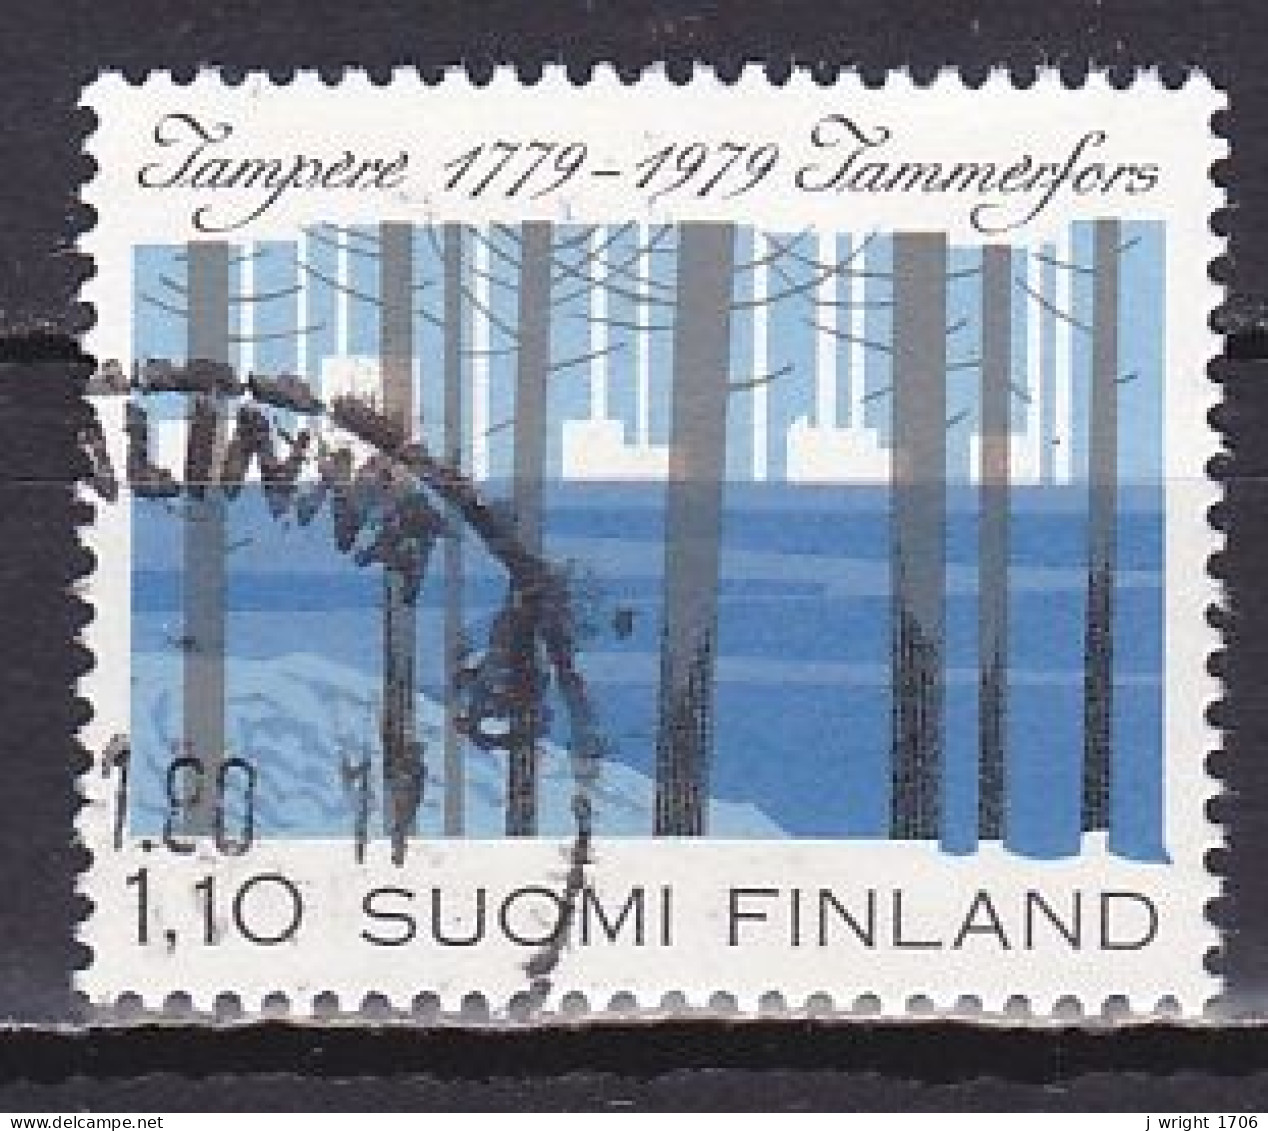 Finland, 1979, Tampere/Tammerfors 200th Anniv, 1.10mk, USED - Gebruikt